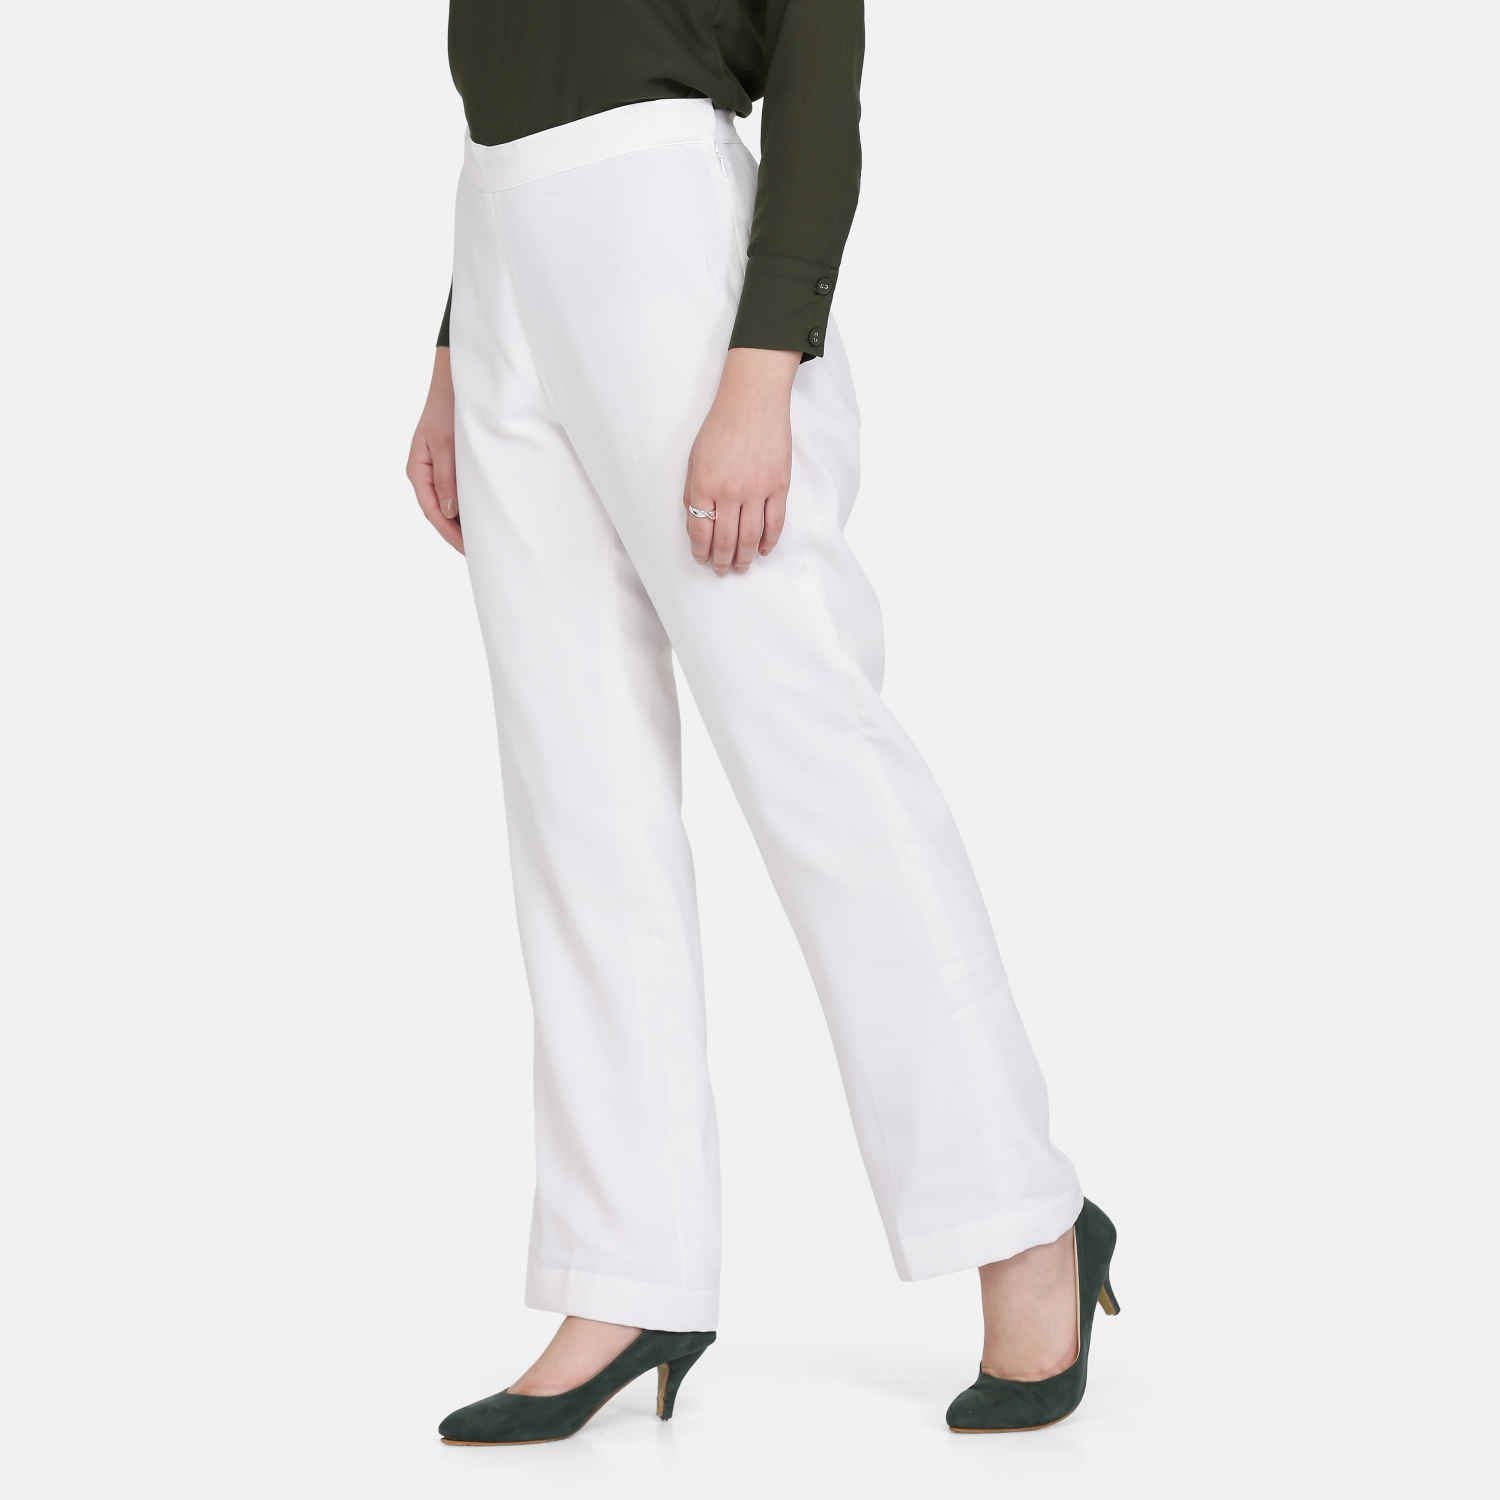 Zara | Pants & Jumpsuits | Zara White Crepe Long Flowy Side Zipper Trousers  Pants Sz Small | Poshmark